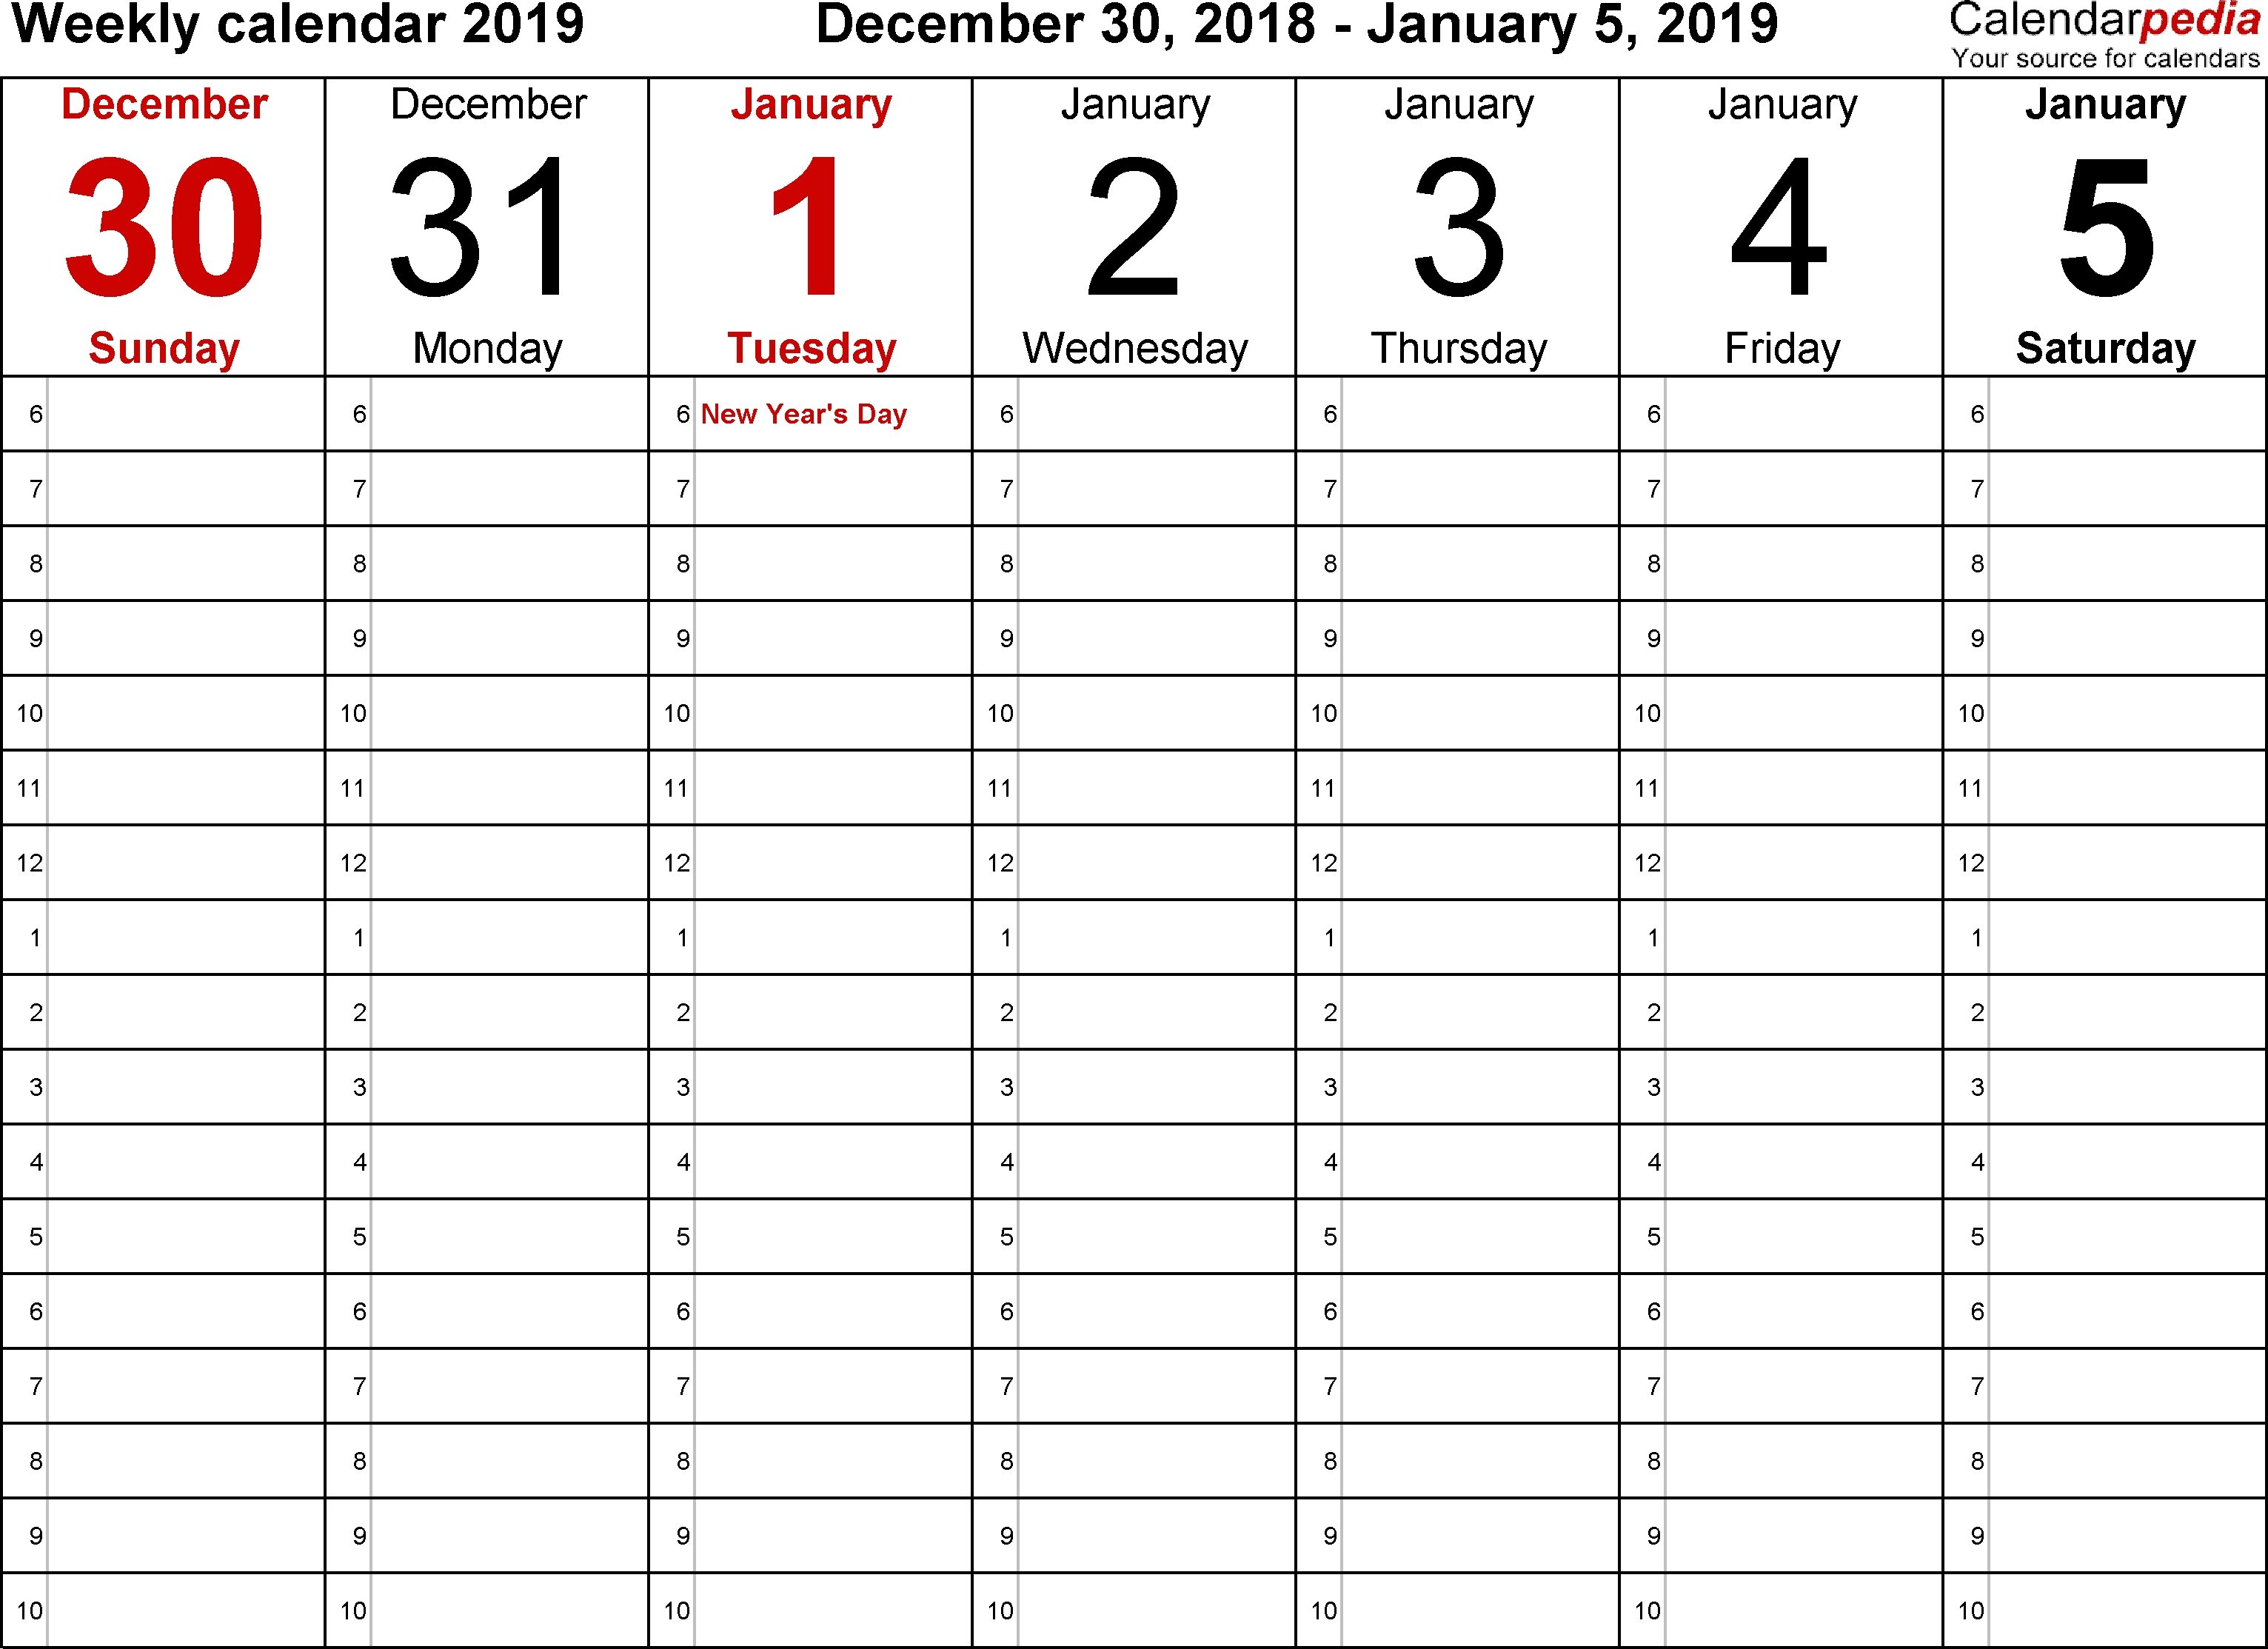 Weekly Calendar 2019 For Excel - 12 Free Printable Templates 6 Week Calendar Template Excel